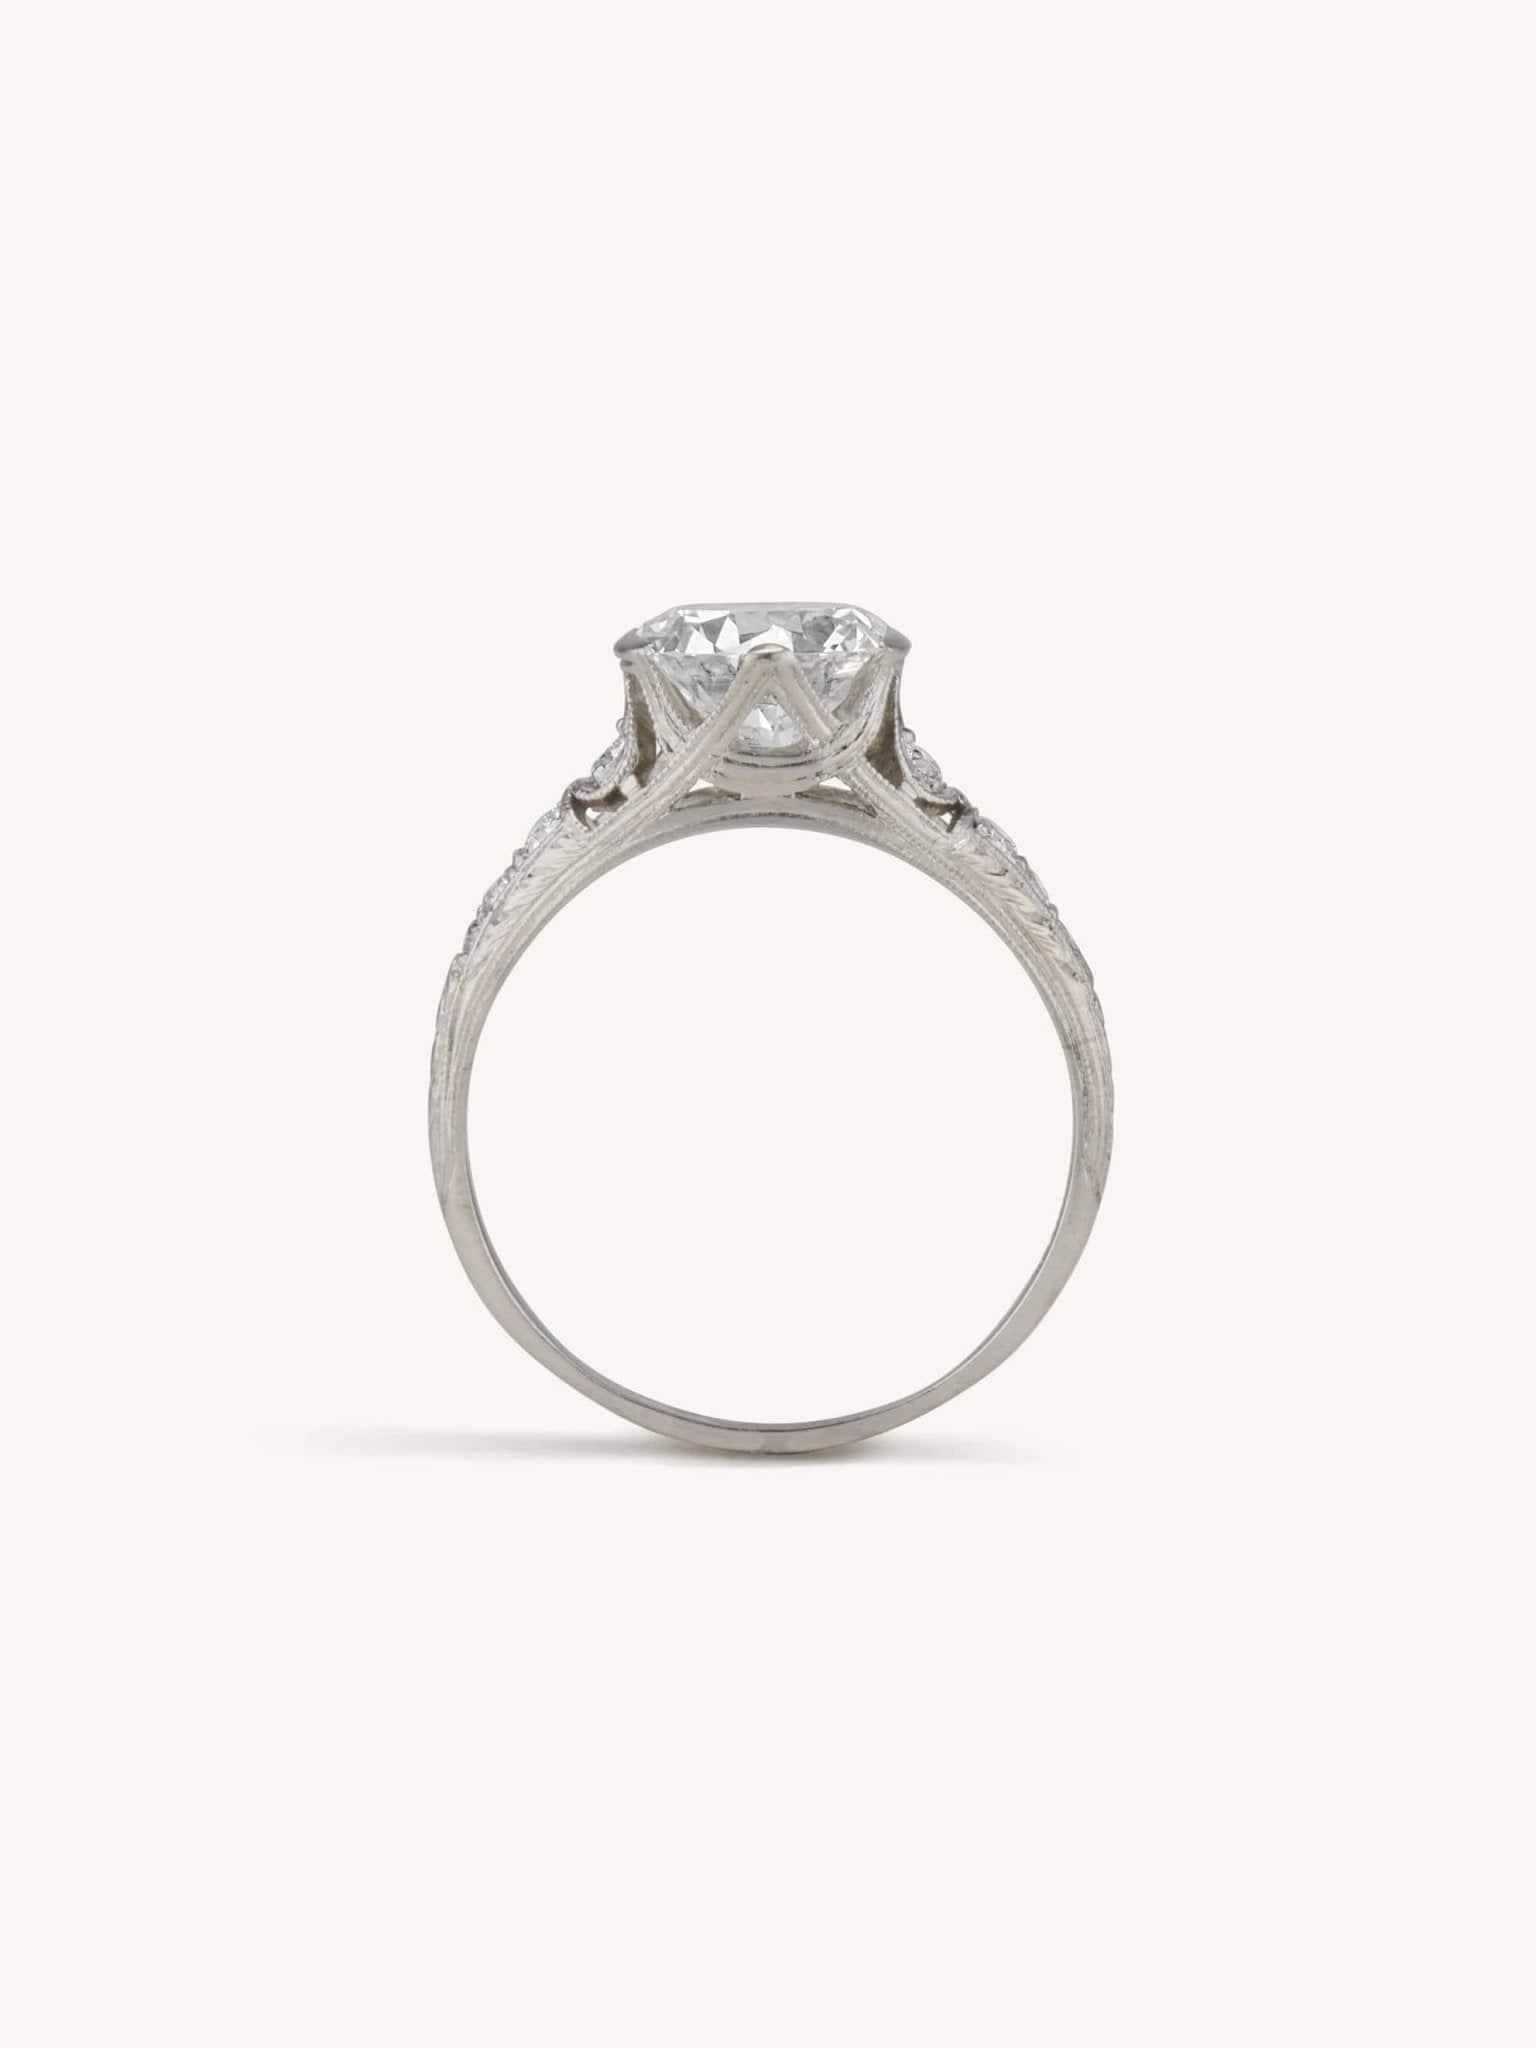 Cushion Cut Moissanite Halo Engagement Ring, Tiffany Design – Flawless  Moissanite